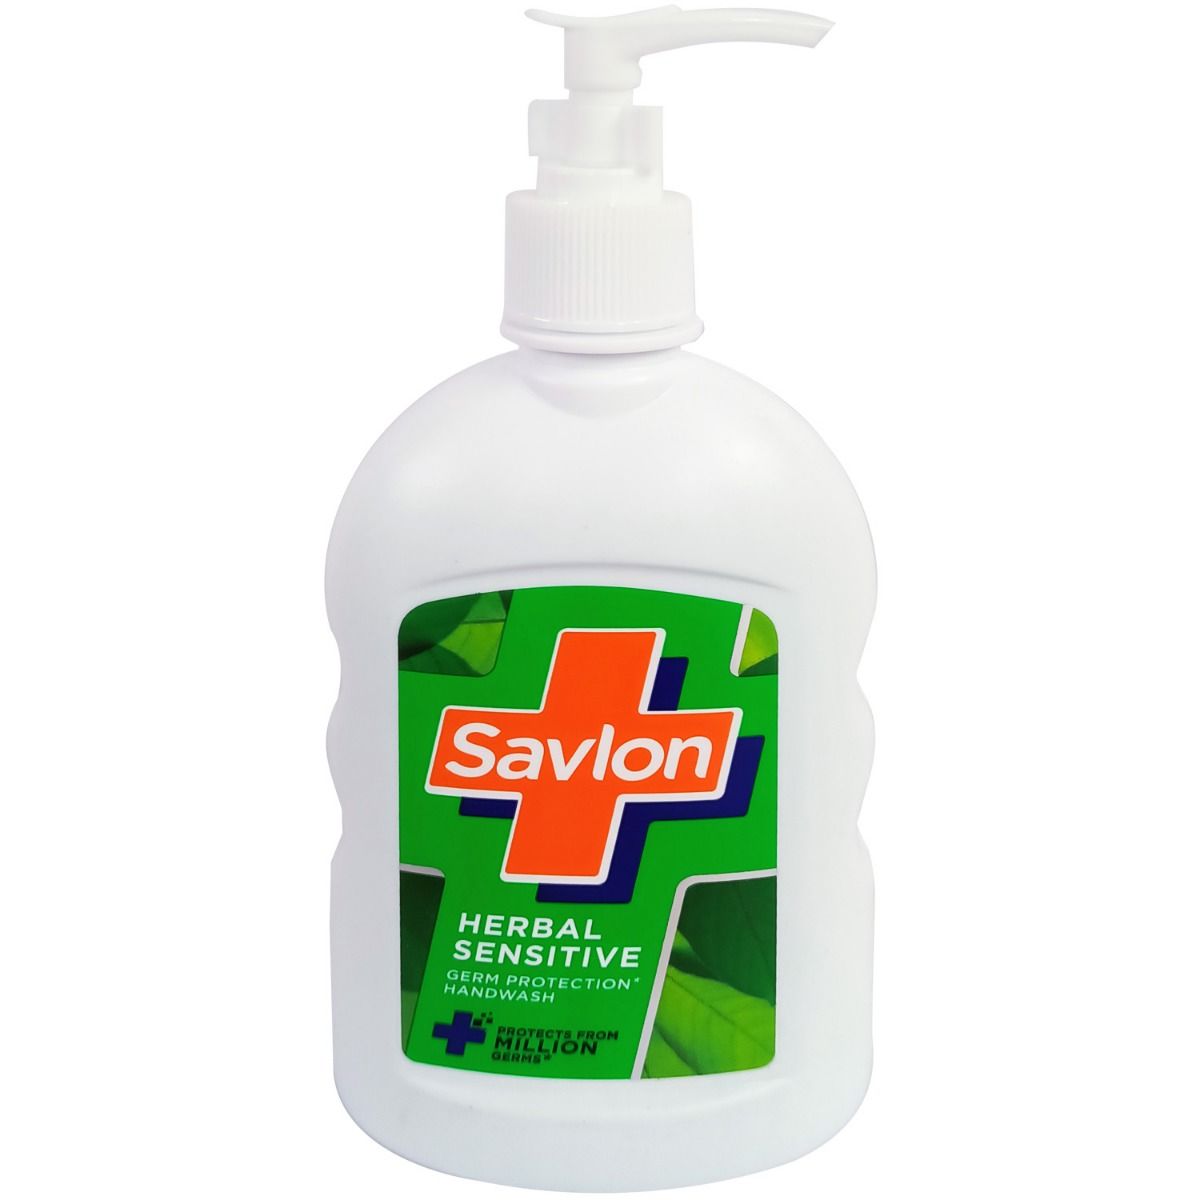 Savlon Herbal Sensitive Germ Protection Handwash, 200 ml, Pack of 1 